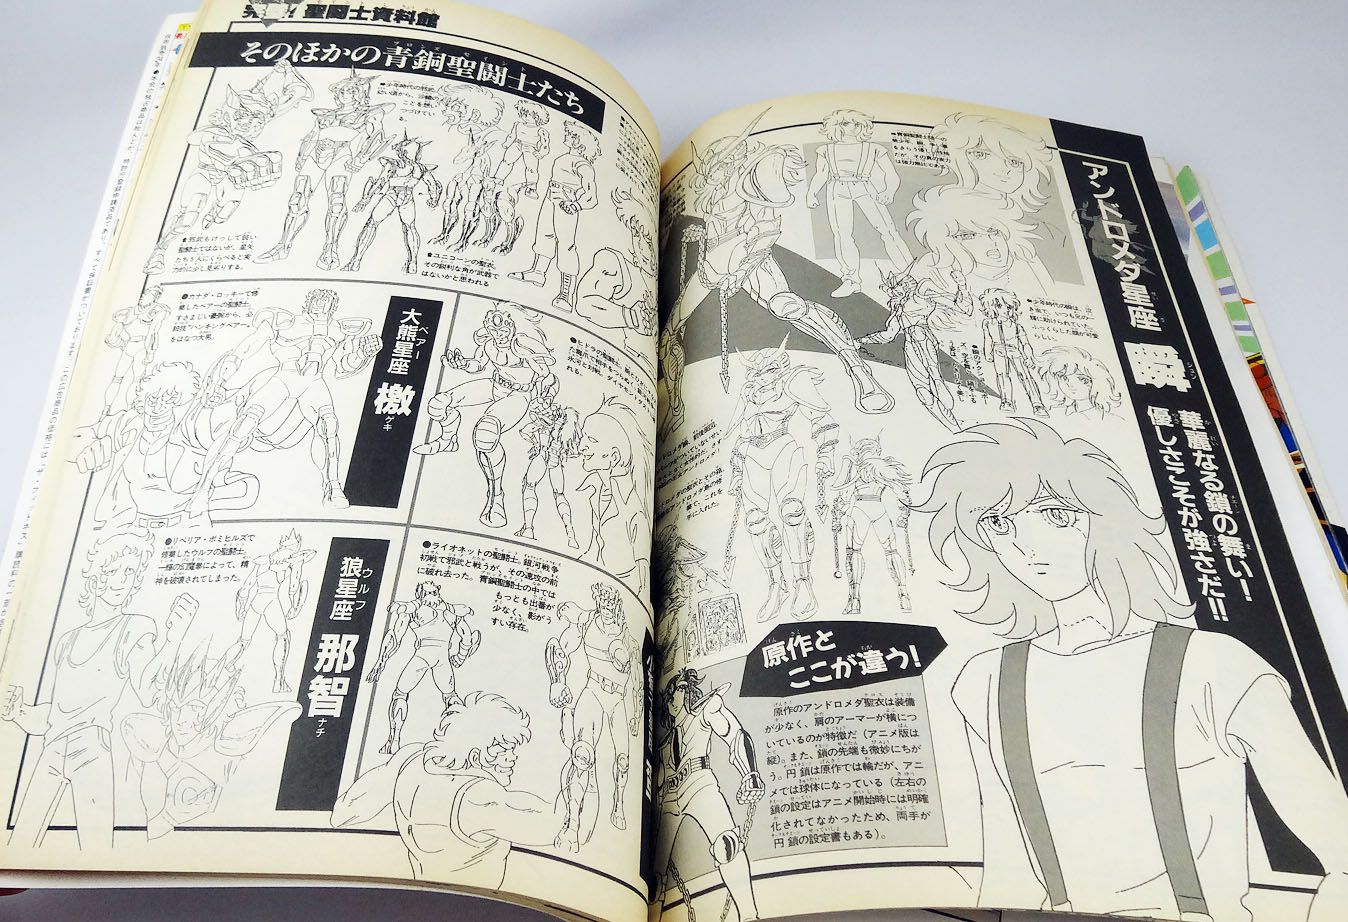 Jump Gold Selection 3: Saint Seiya Anime Special 3 –